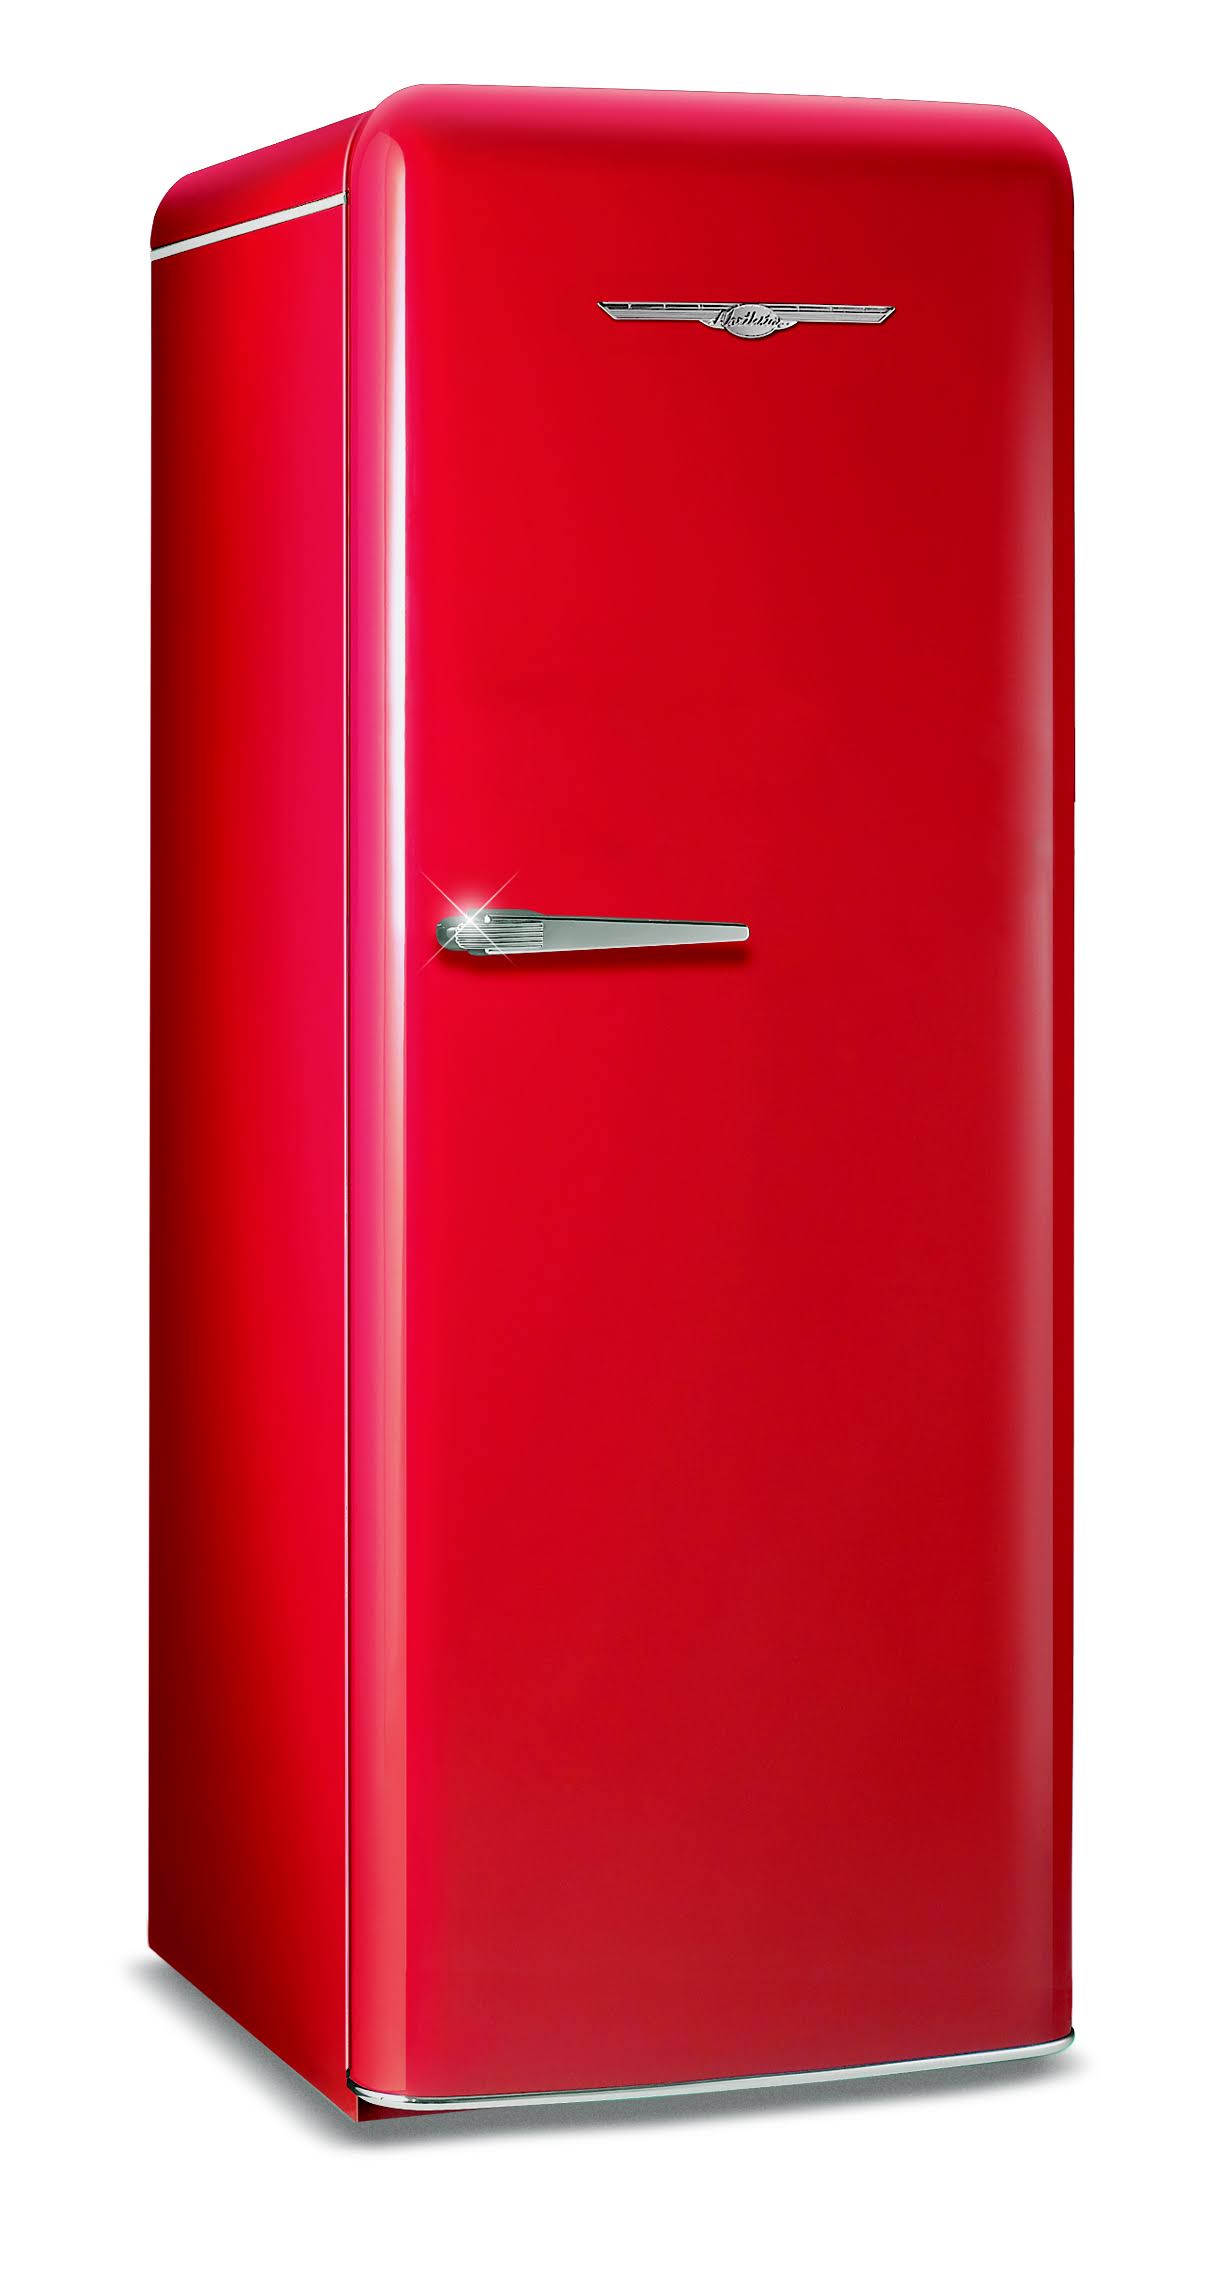 Elmira Refrigerator	1949